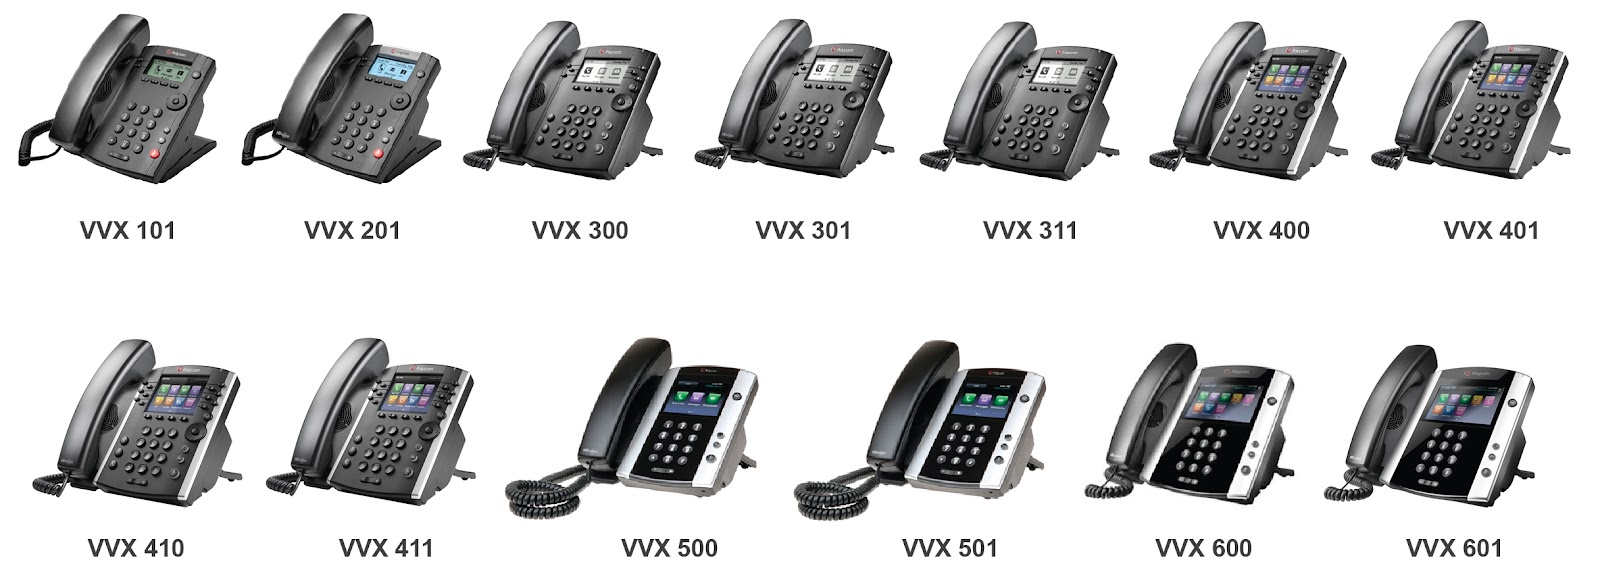 polycom phones vvx 300 manual